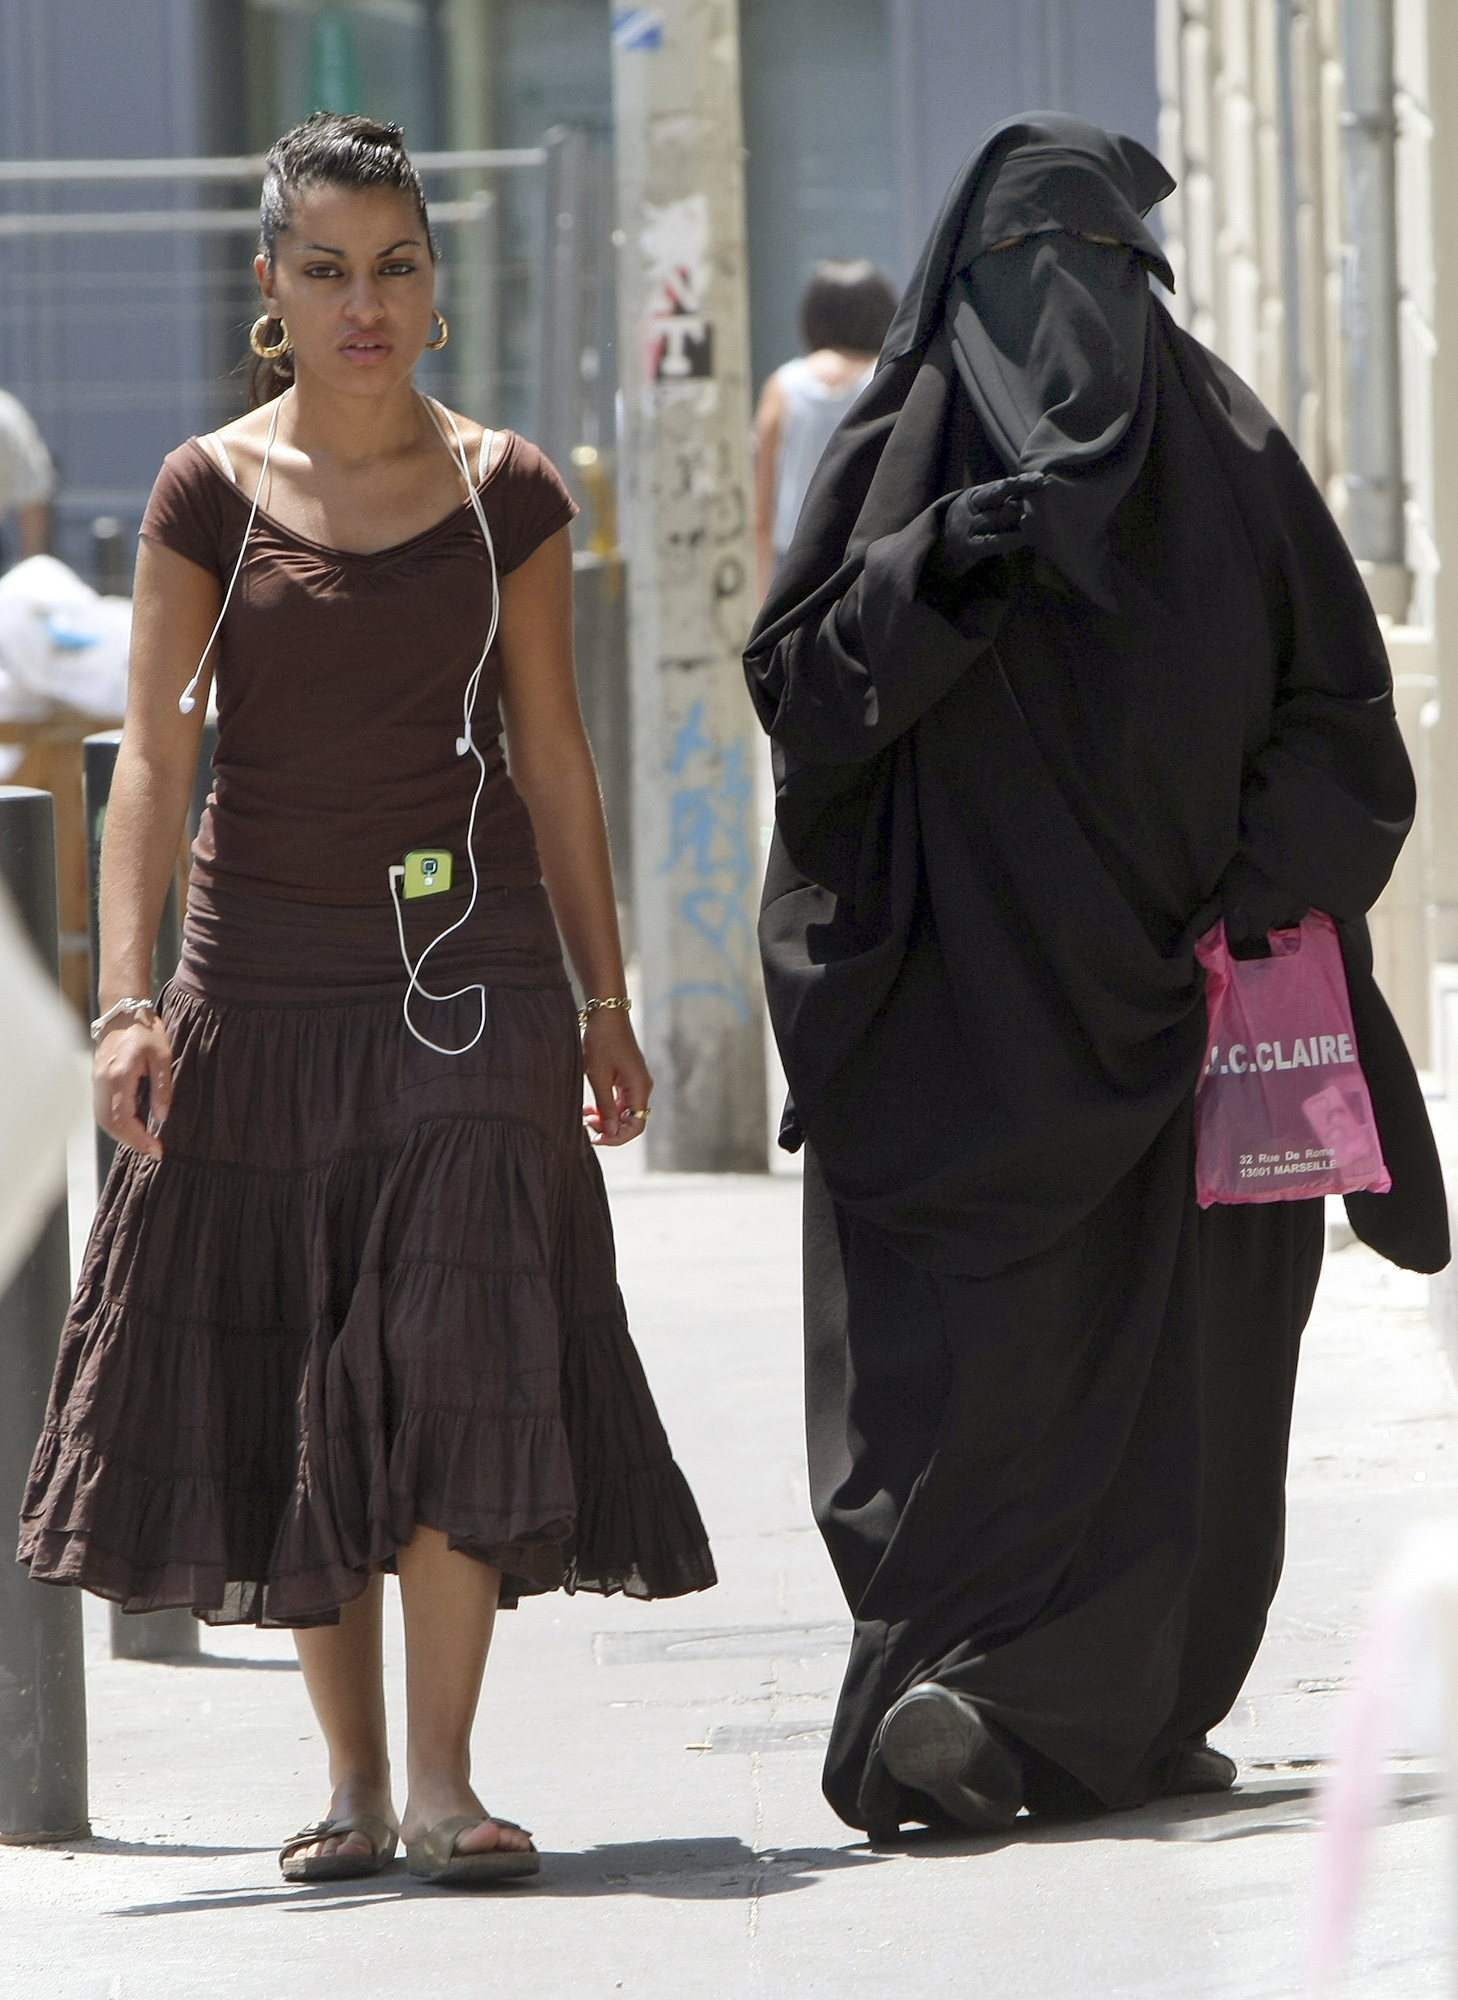 Islamofobi, Muslimer, Forbud, Burka, Niqab, Burkaförbud